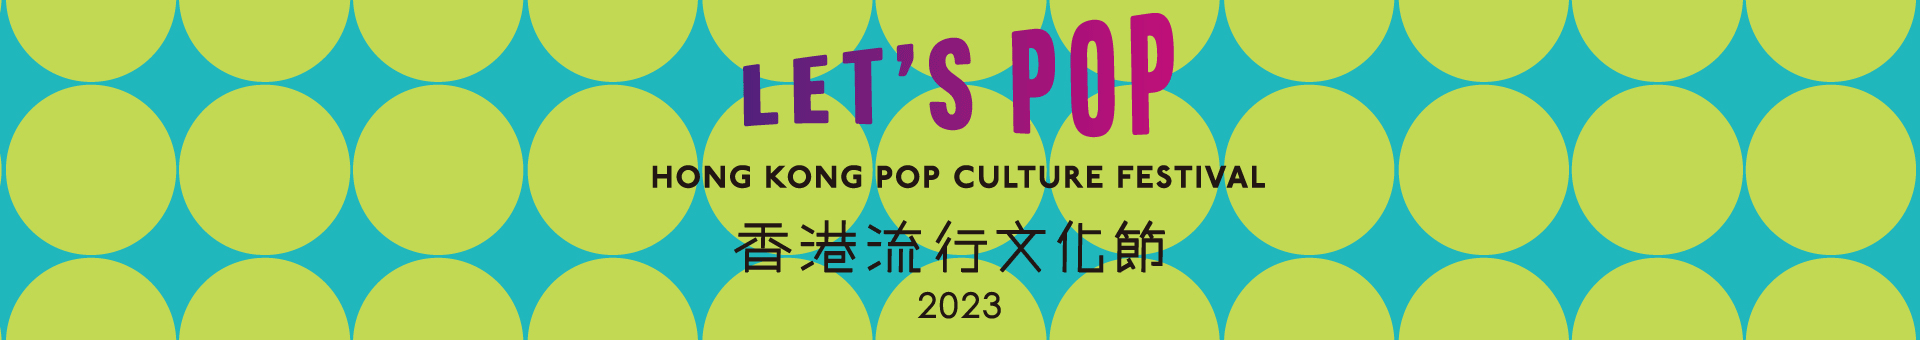 Hong Kong Pop Culture Festival 2023